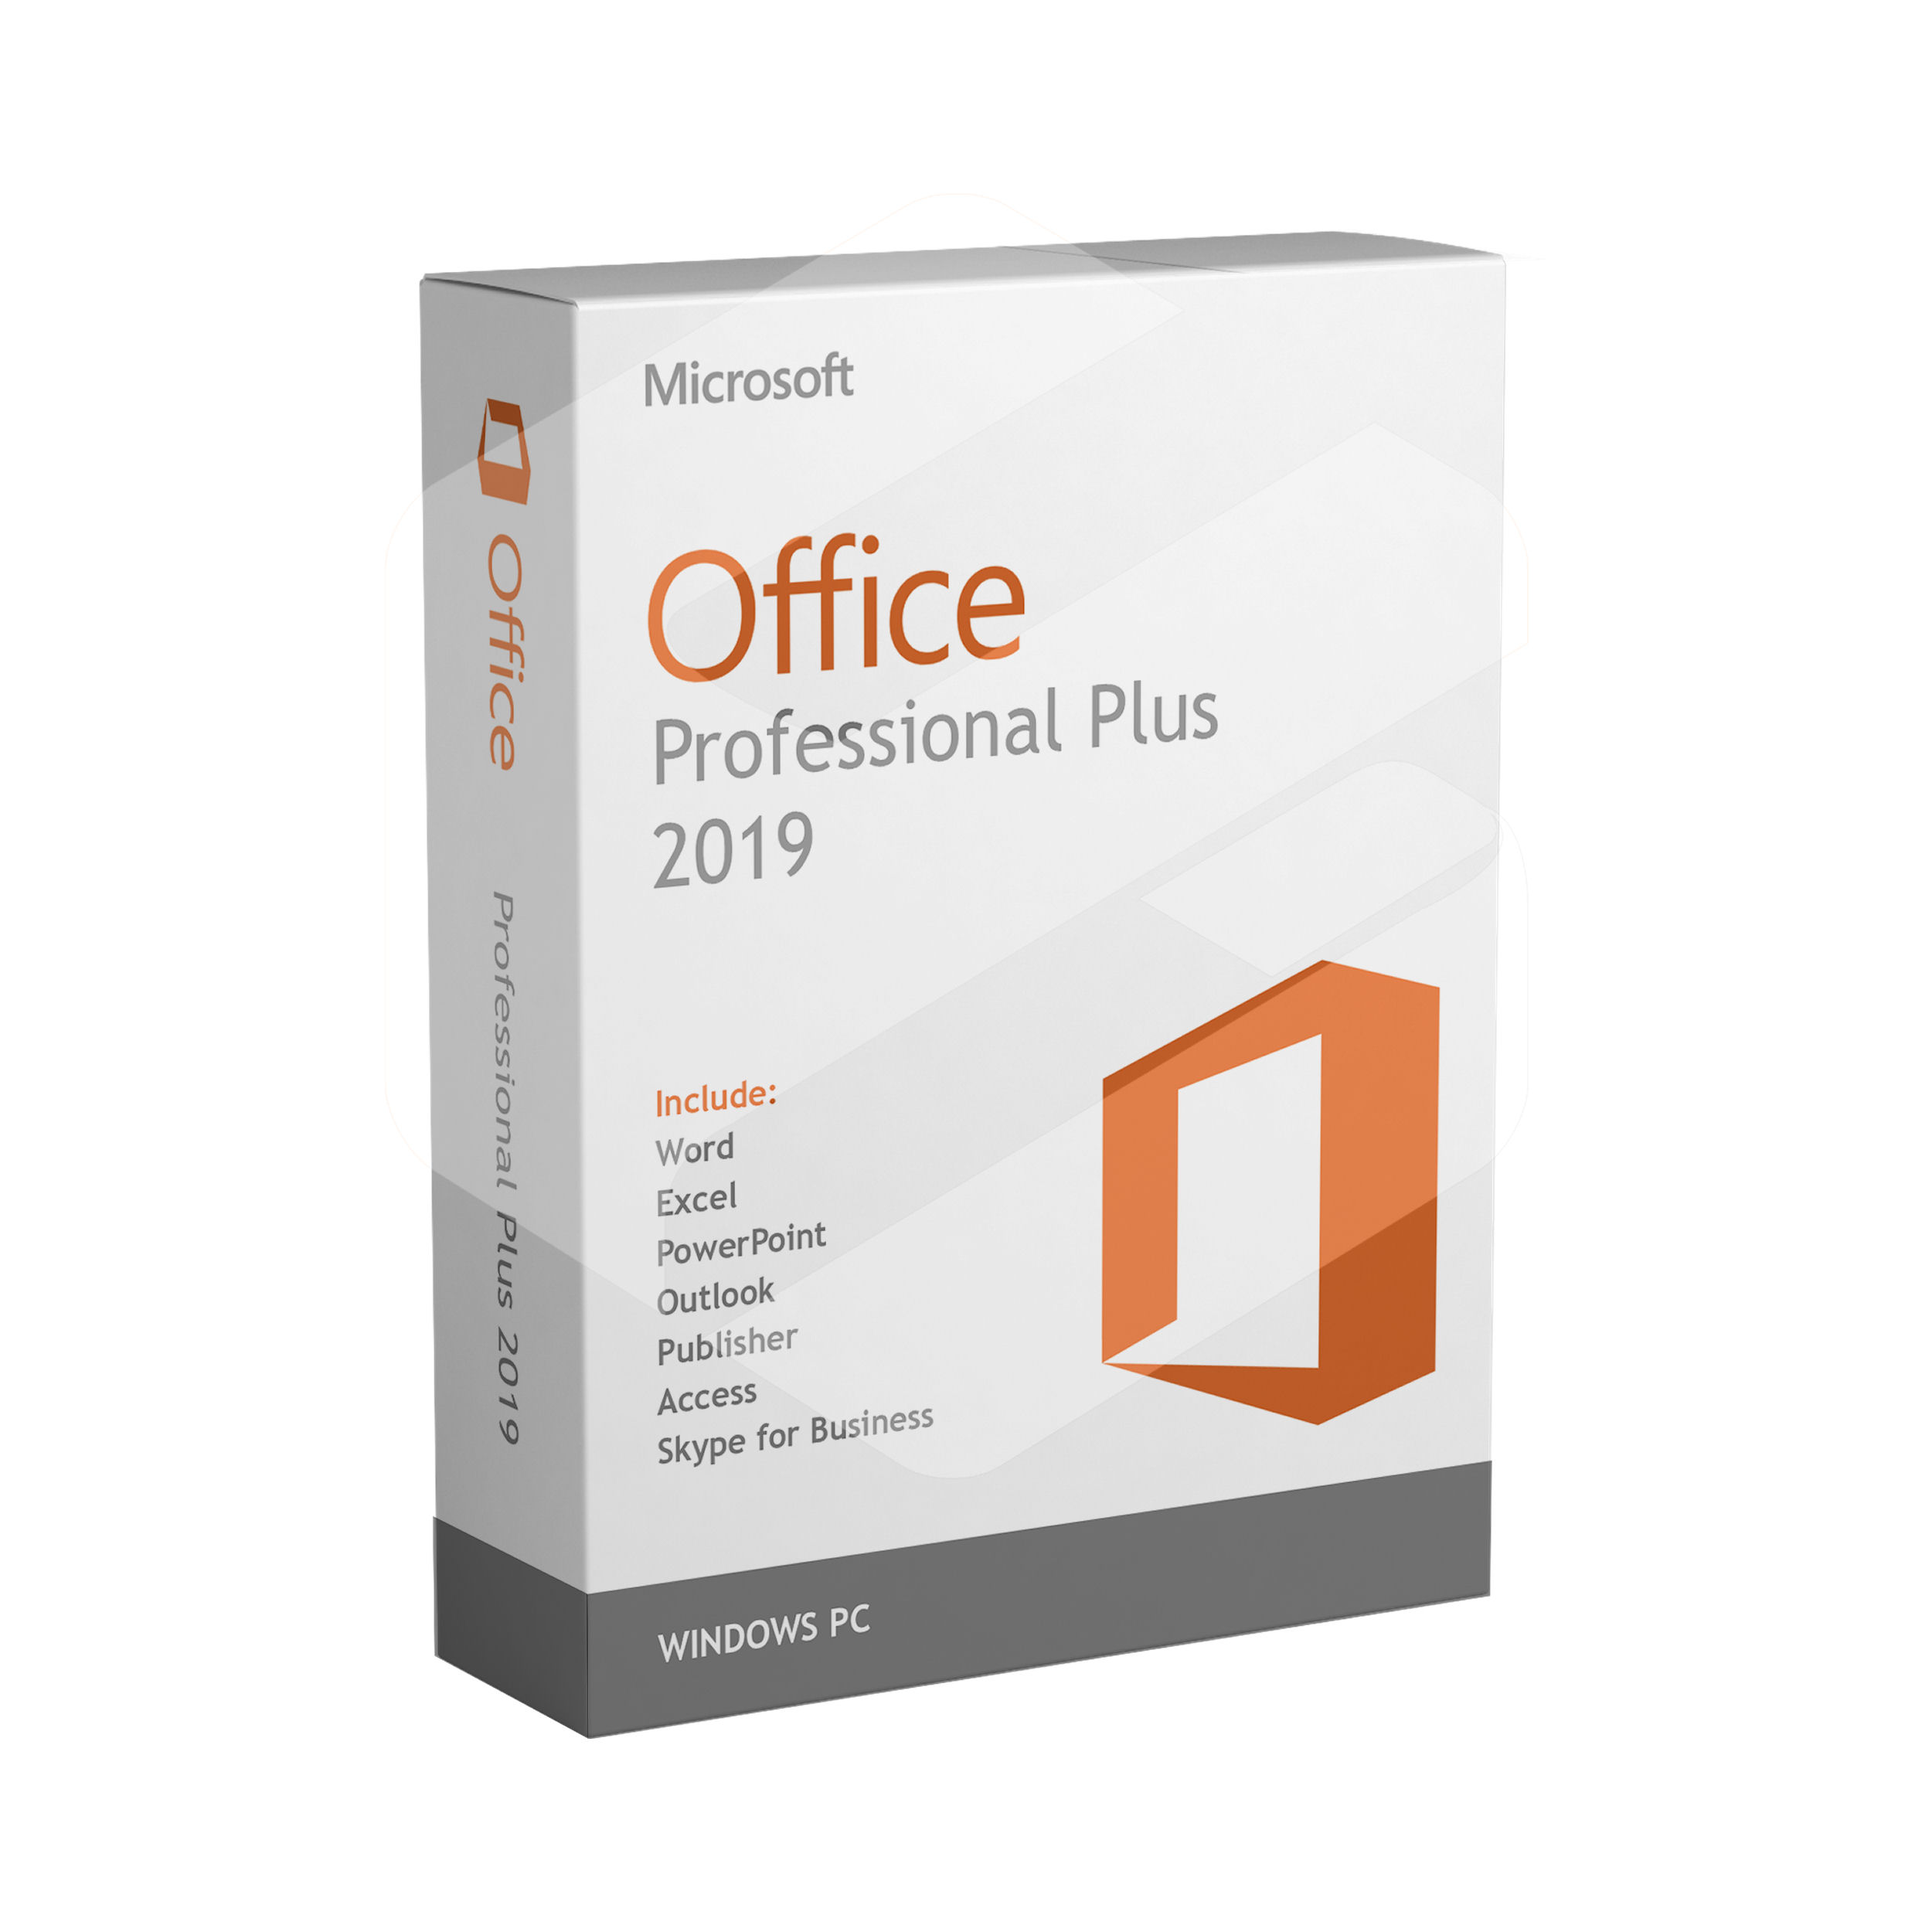 Microsoft Office 2019 Professional Plus | SW10196